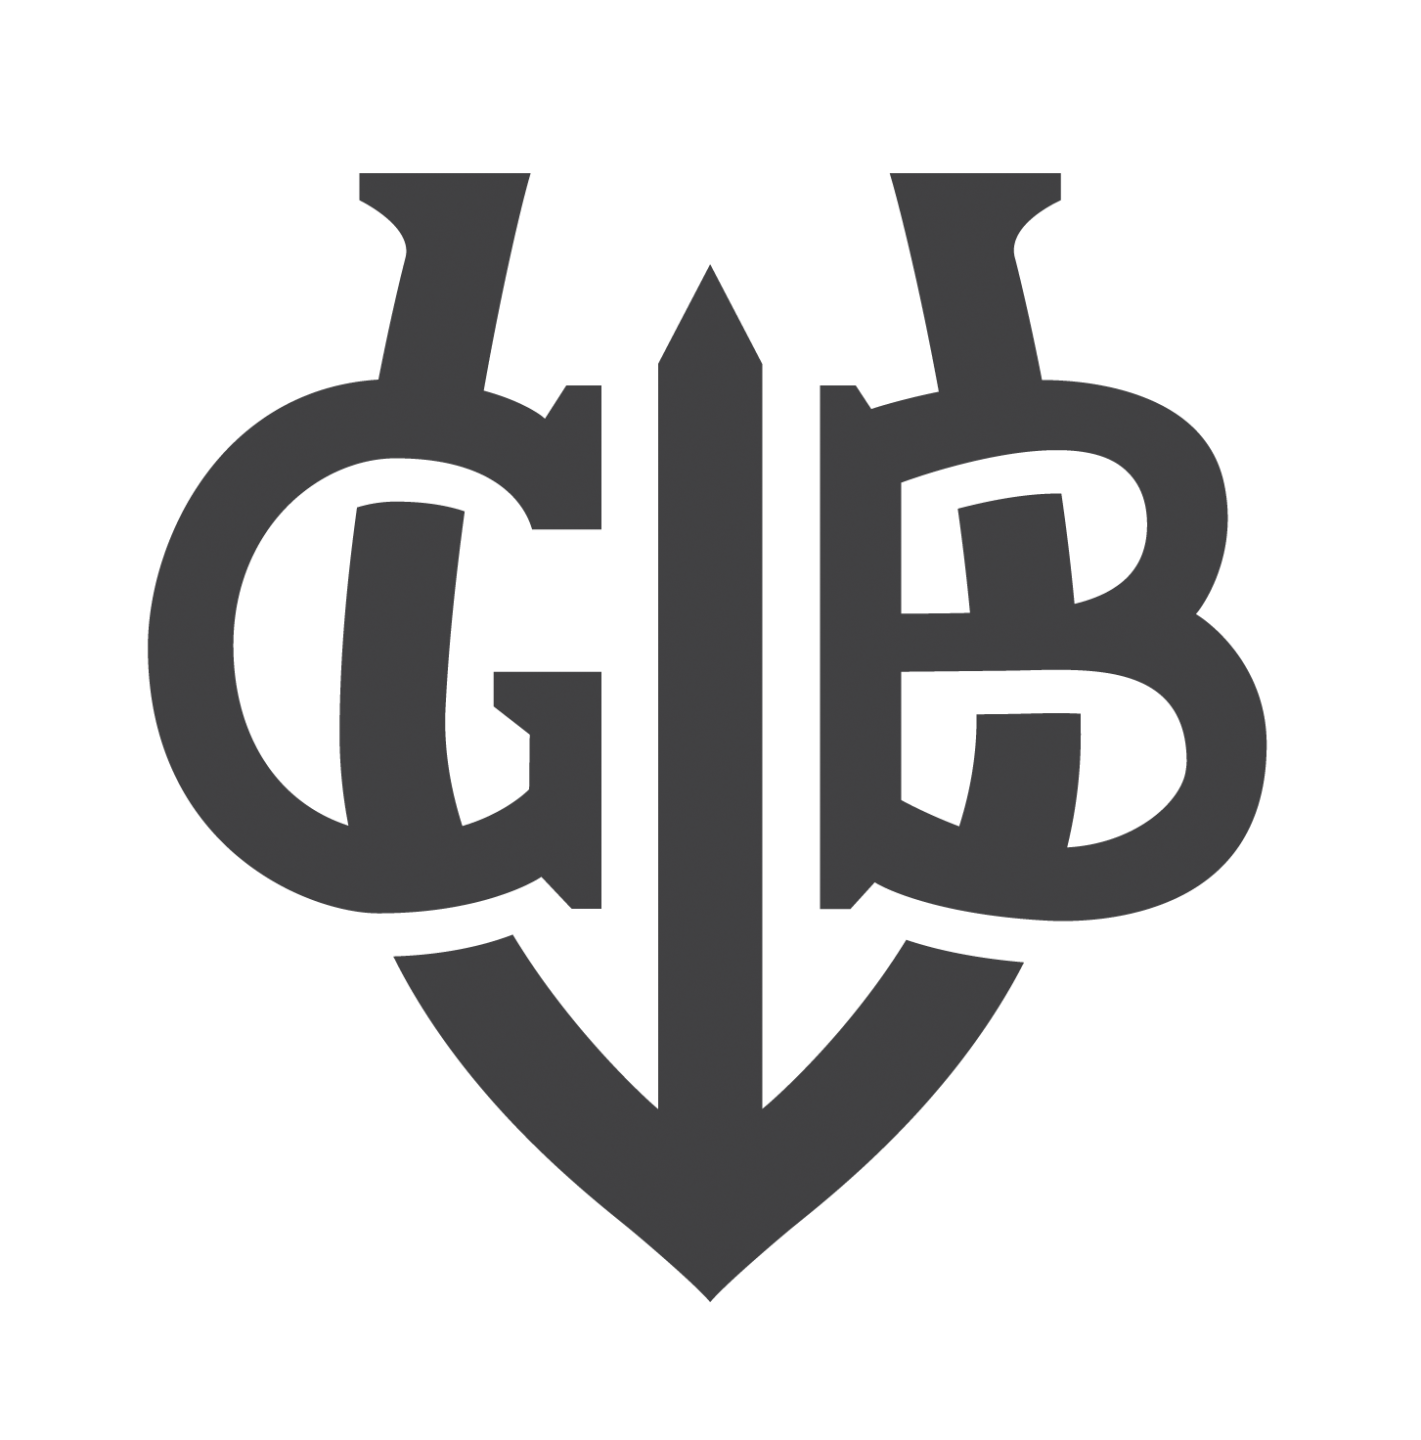 Gundlach Bundschu logo